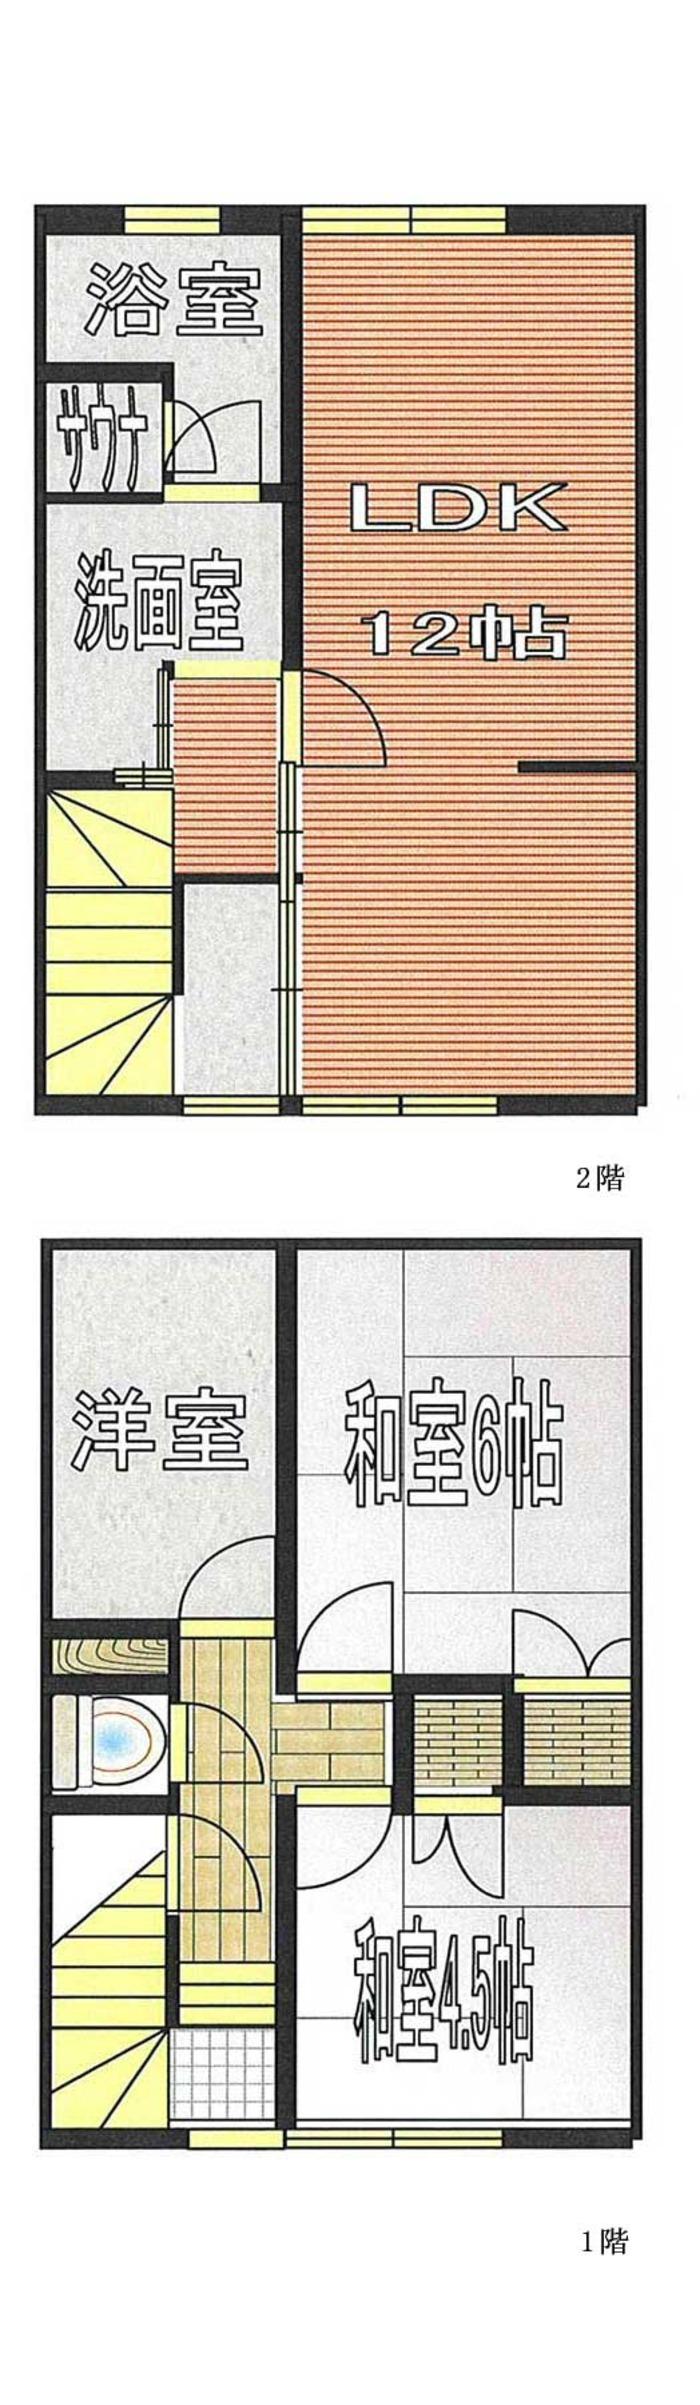 Floor plan. 3LDK, Price 5.5 million yen, Occupied area 77.25 sq m